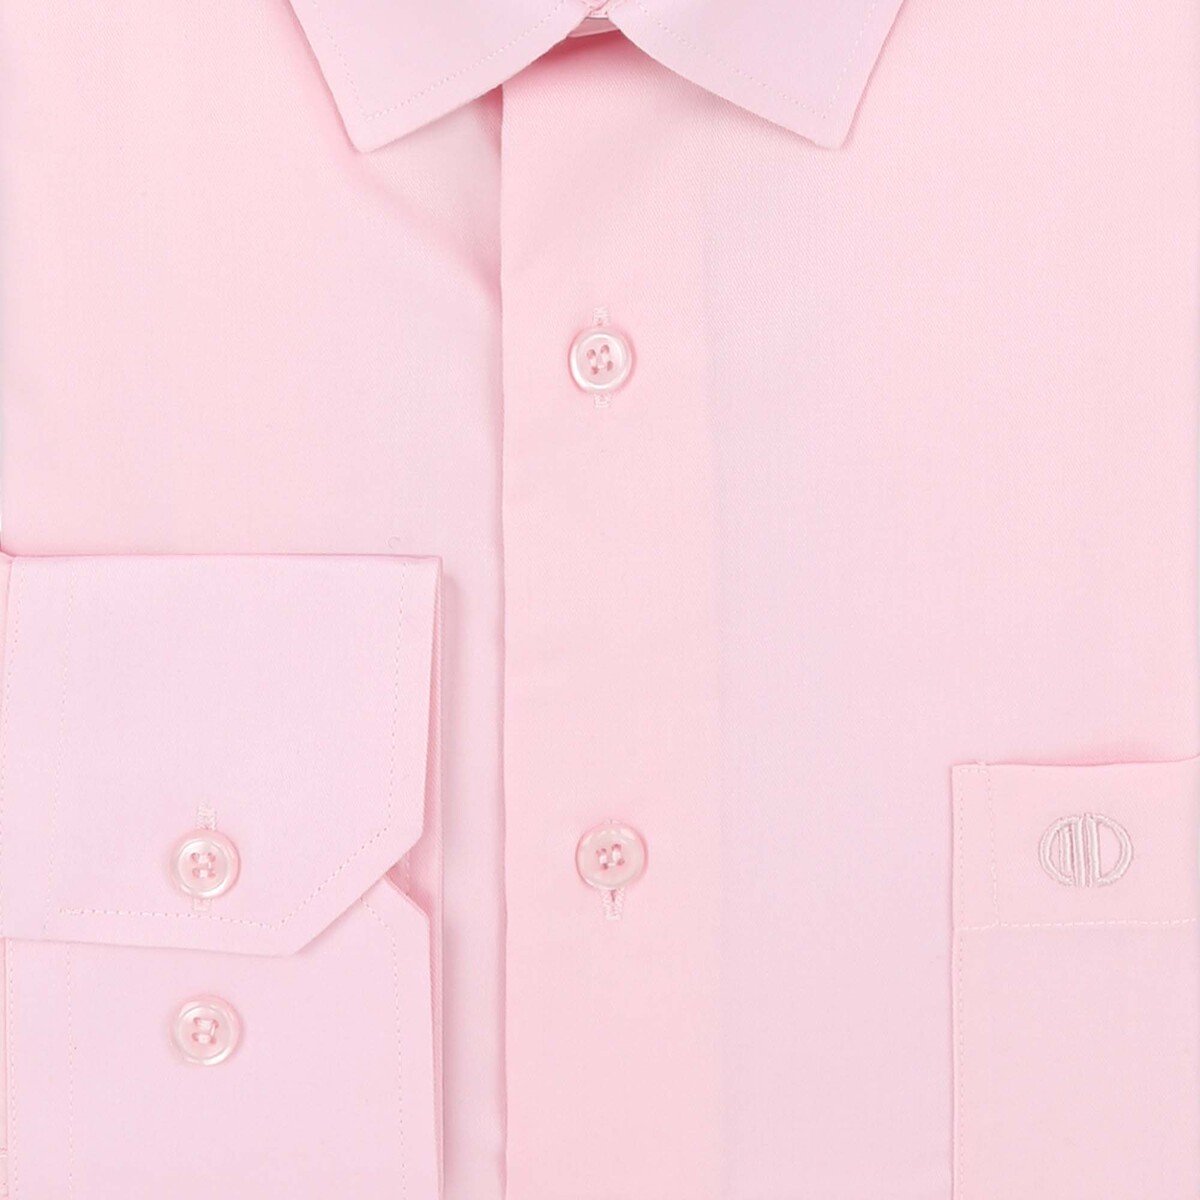 Marco Donateli Men's Formal Shirt Solid Light Pink, 42